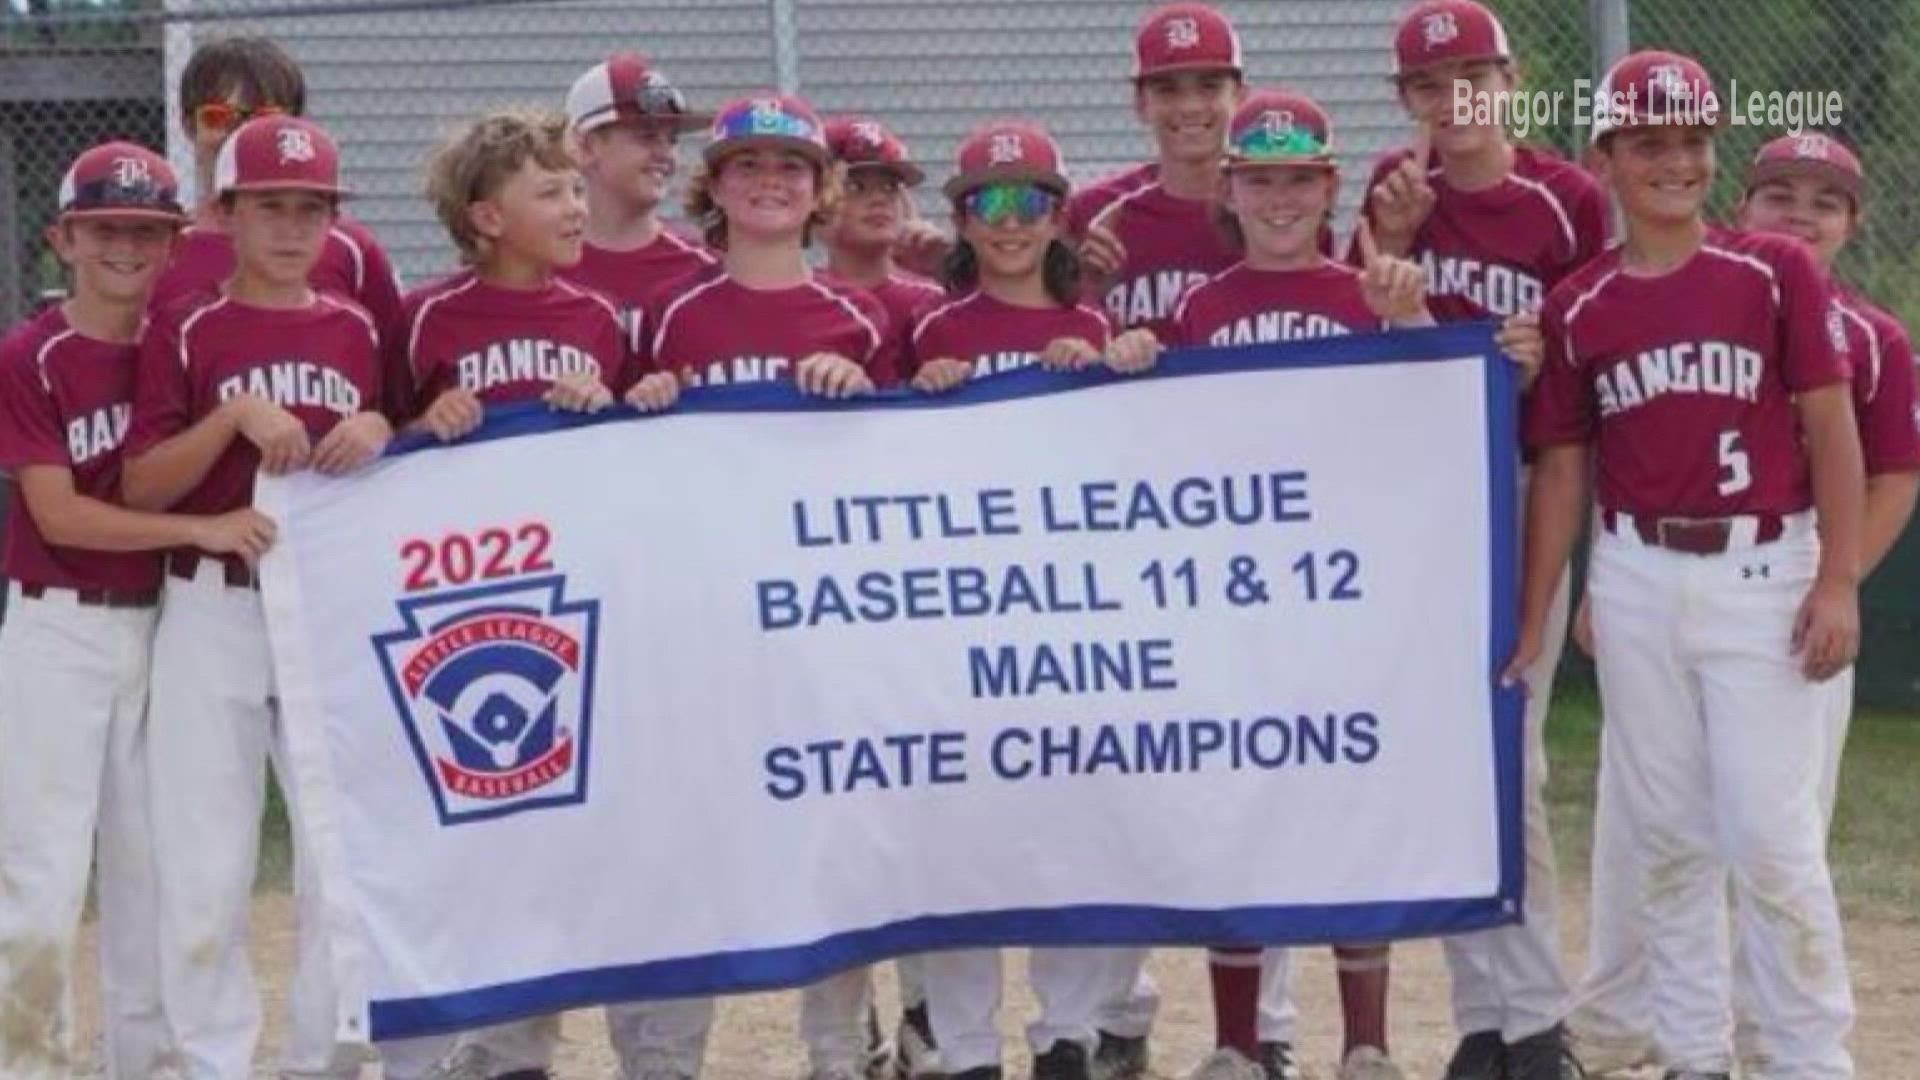 The Bangor East Little League Squad beat Brattleboro, Vermont 3-0 in the Little League World Series New England Regional.